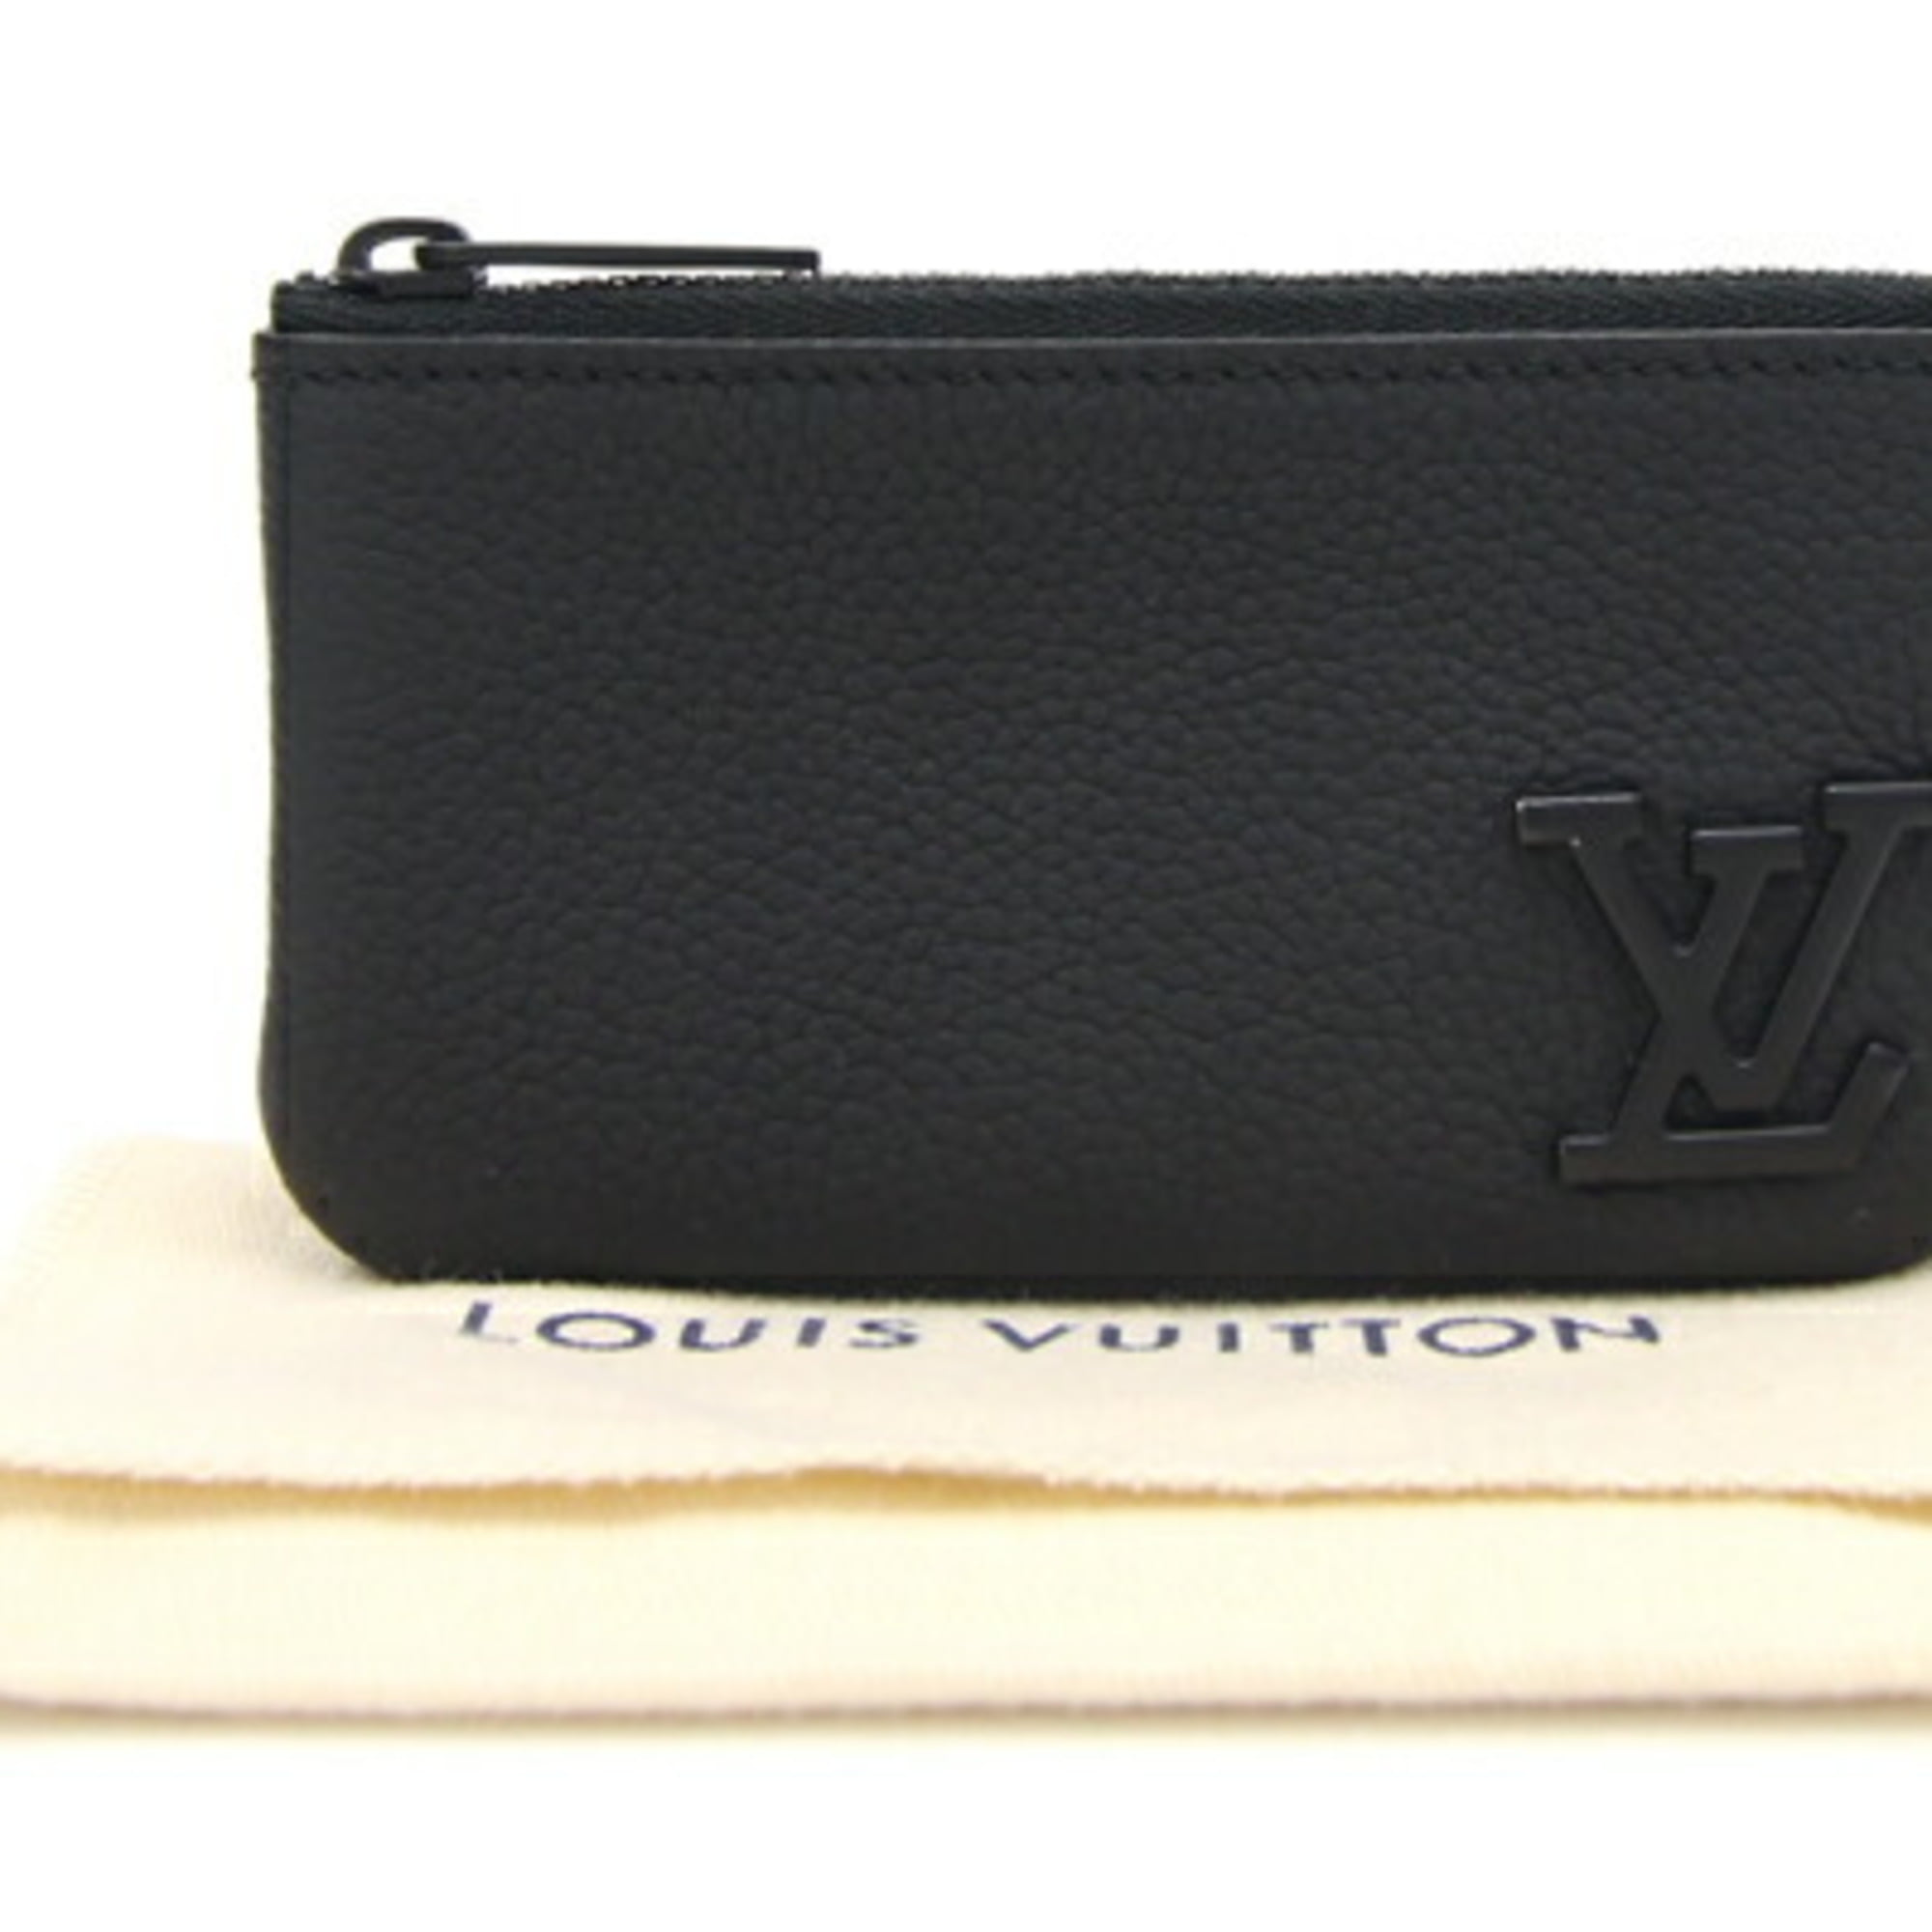 Louis Vuitton Men's Key Pouch